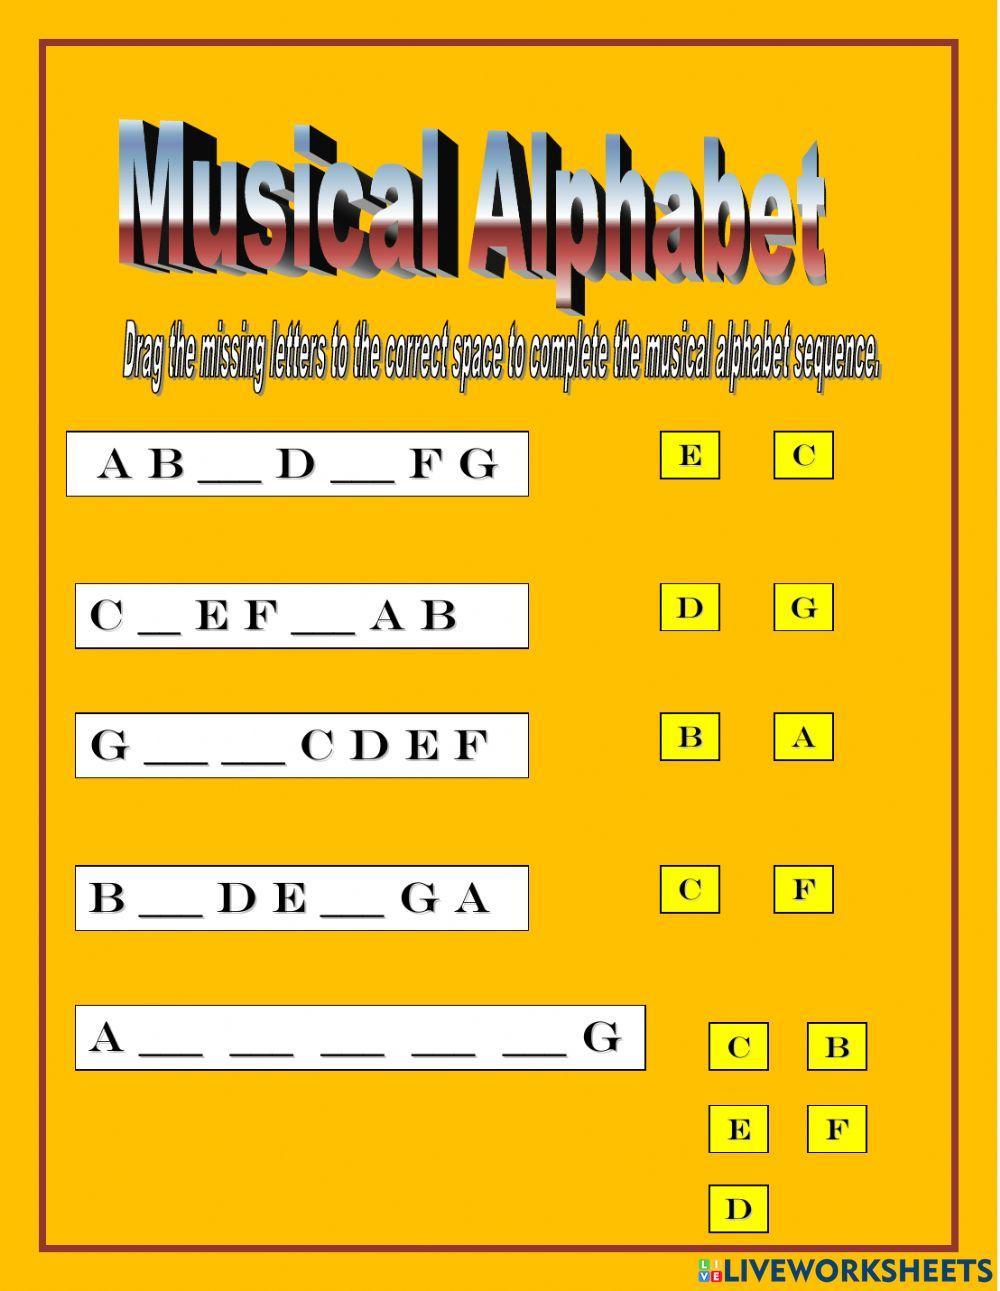 Musical alphabet order